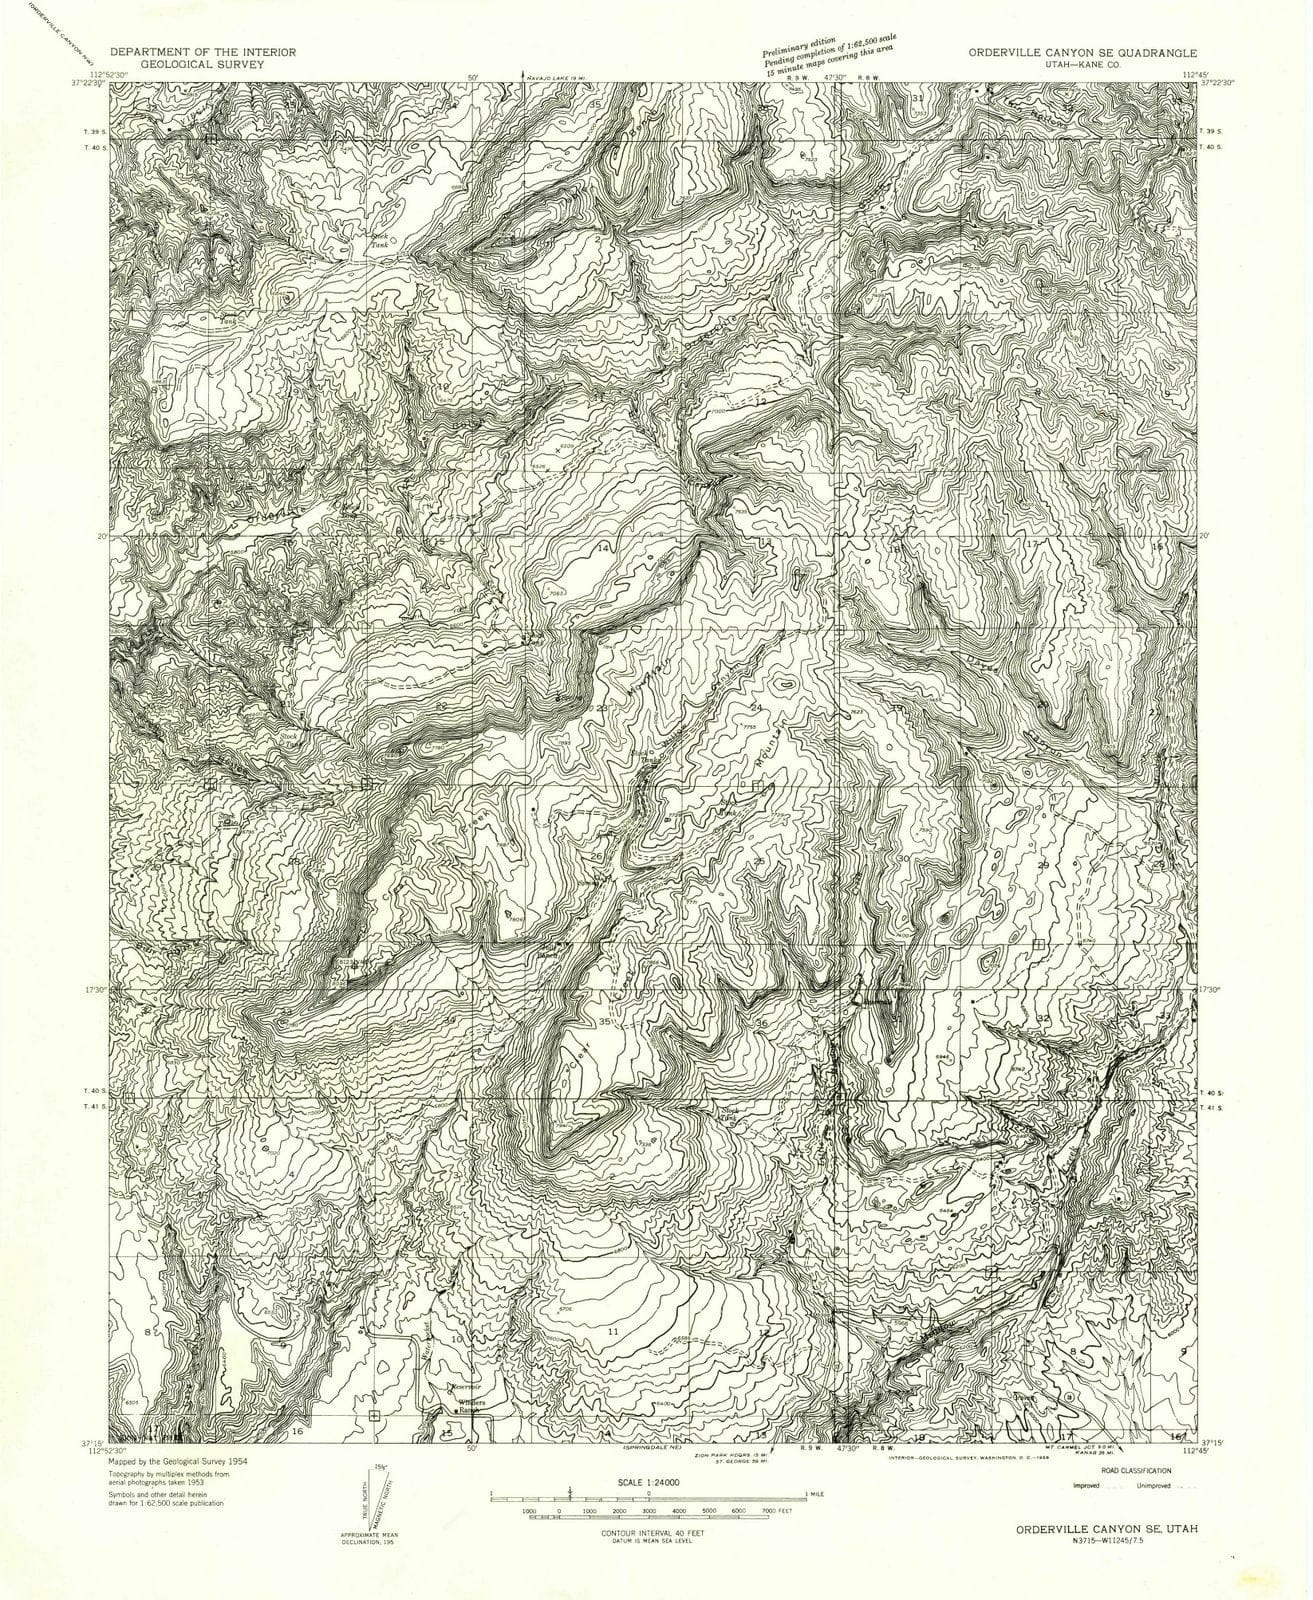 1954 Orderville Canyon, UT - Utah - USGS Topographic Map v2